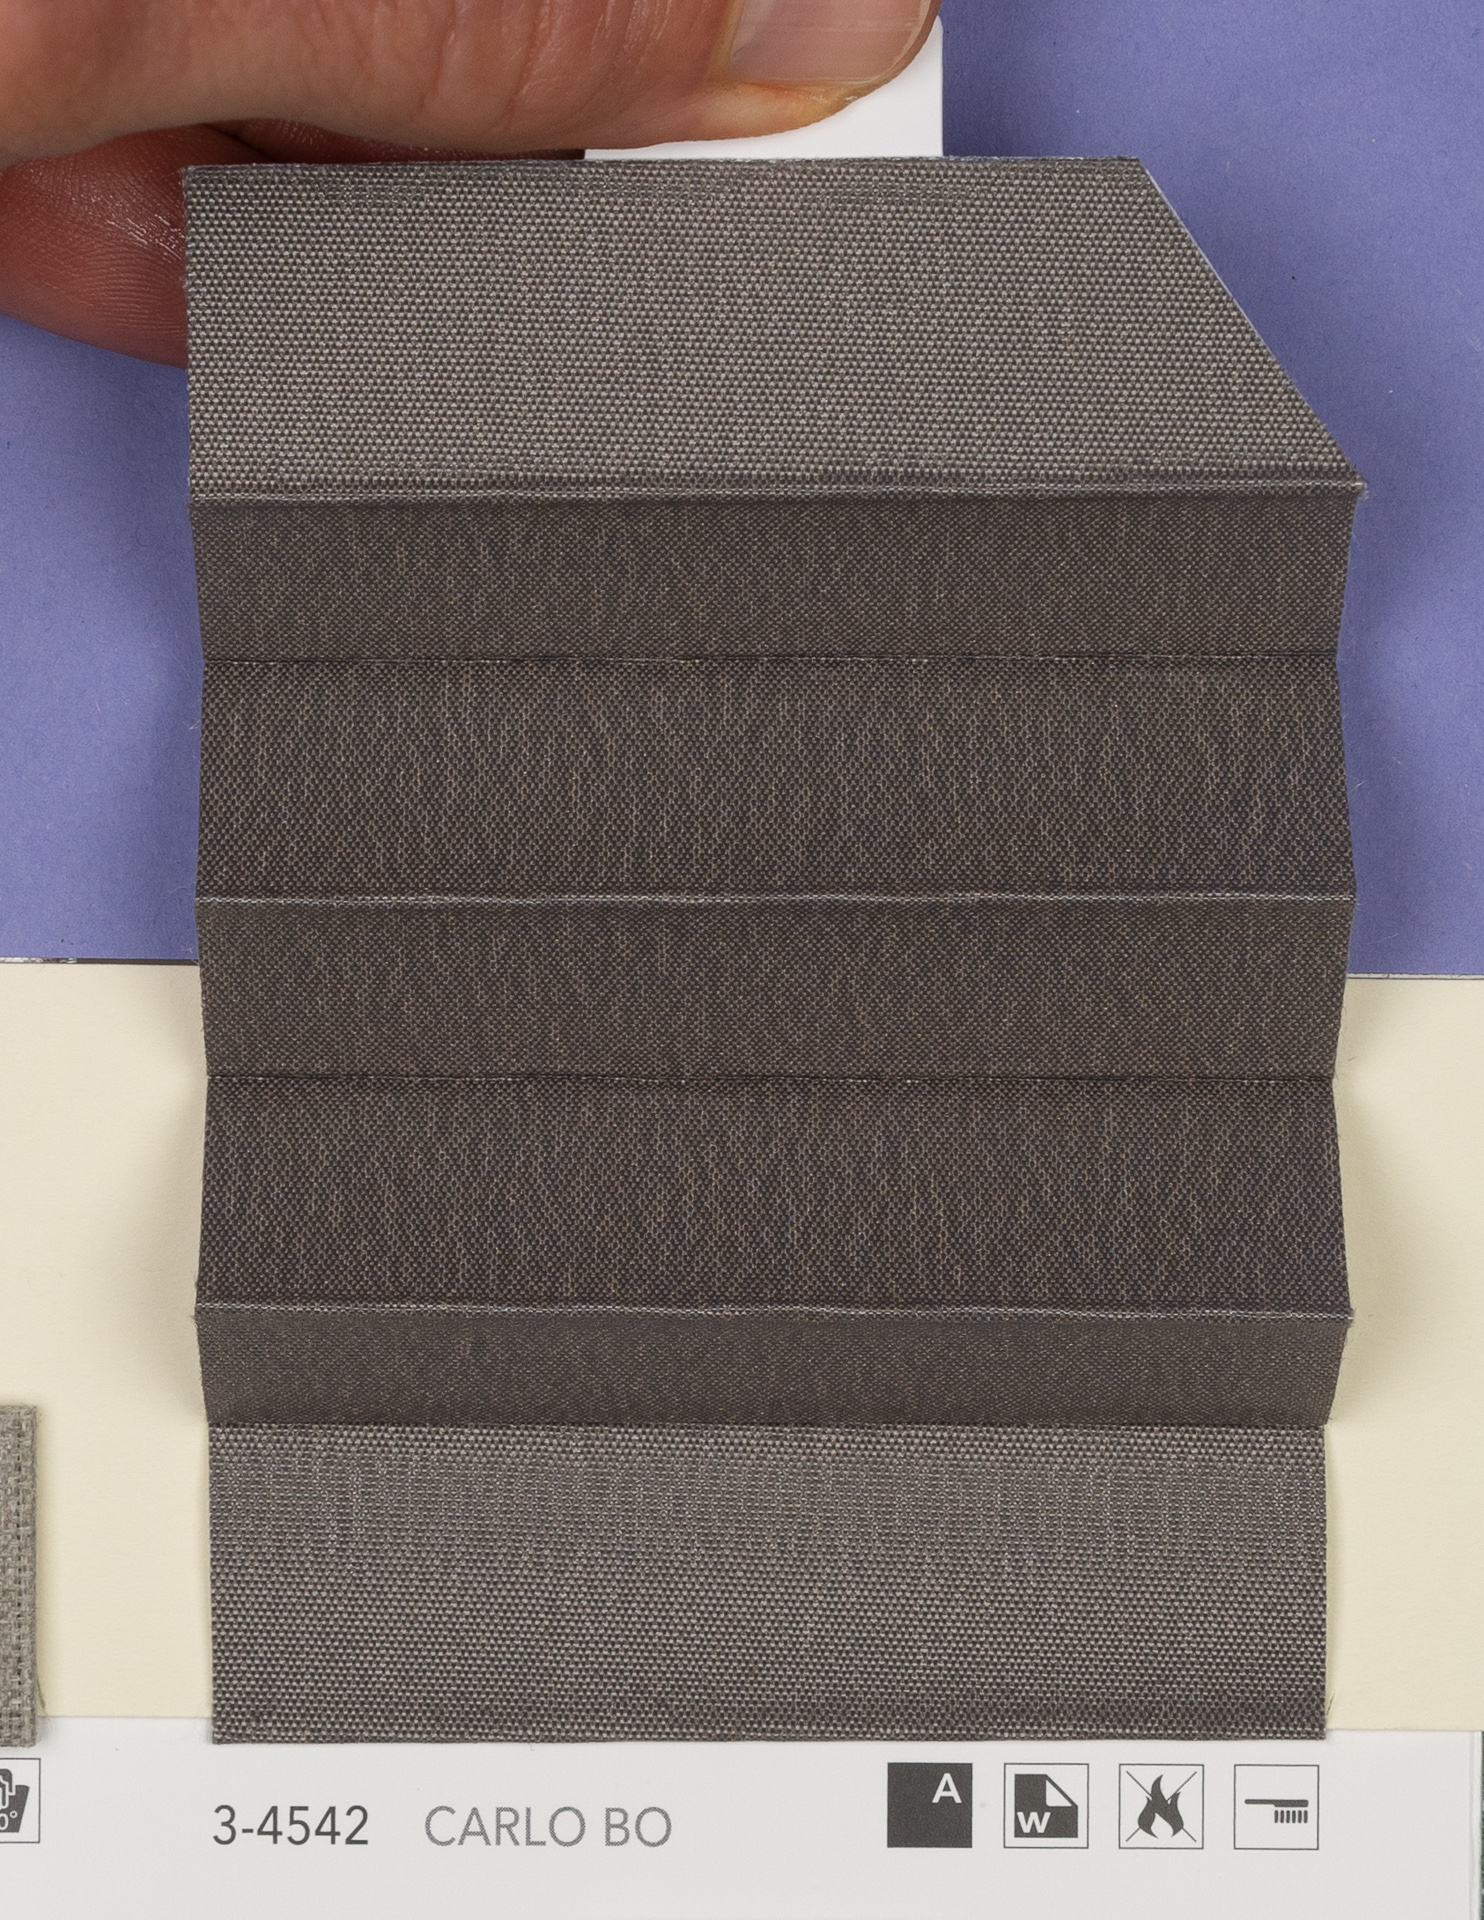 MHZ Plissee Stoff Muster aus der Farbkarte "20 Flame Retardant" | Material: 50 % PES / 50 % PES FR